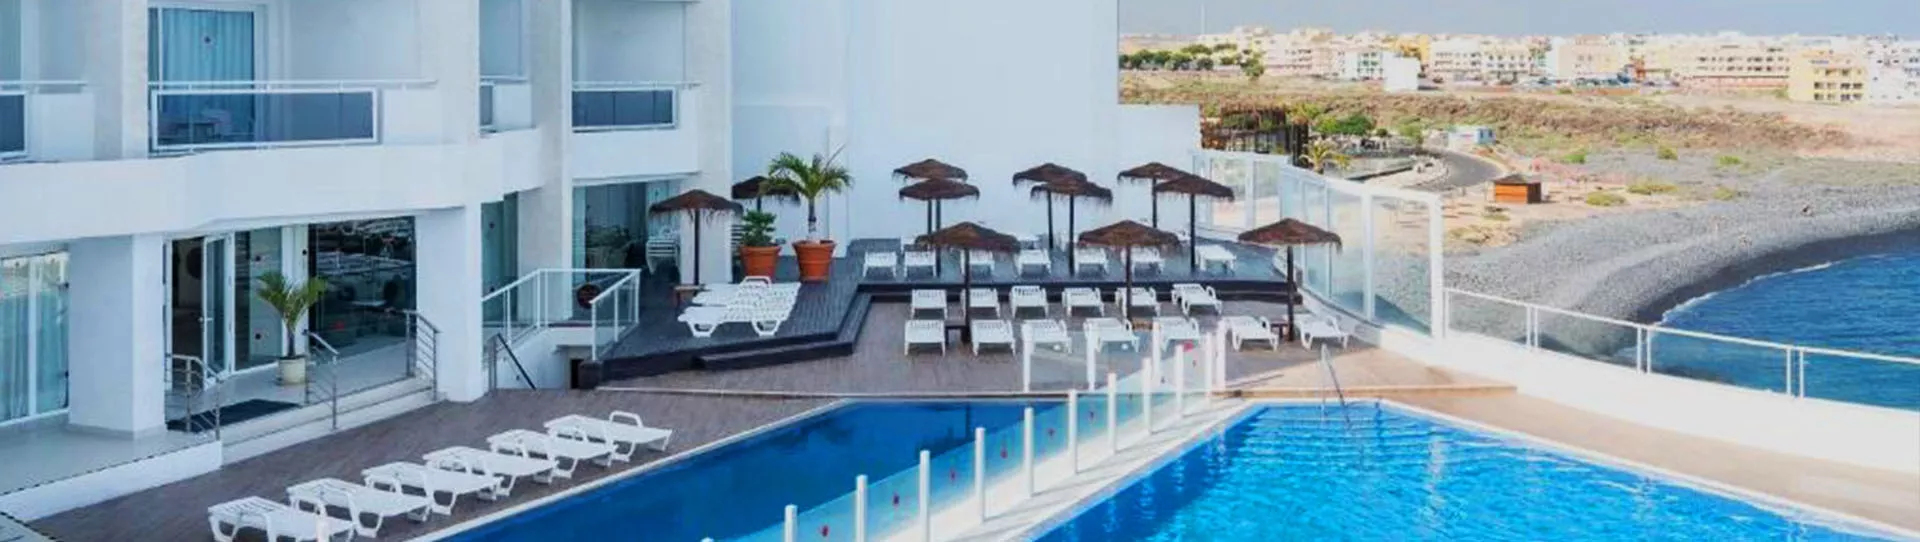 Spain golf holidays - Hotel Tenerife Golf & Sea View ( Ex Vincci Tenerife Golf Hotel) - Photo 1